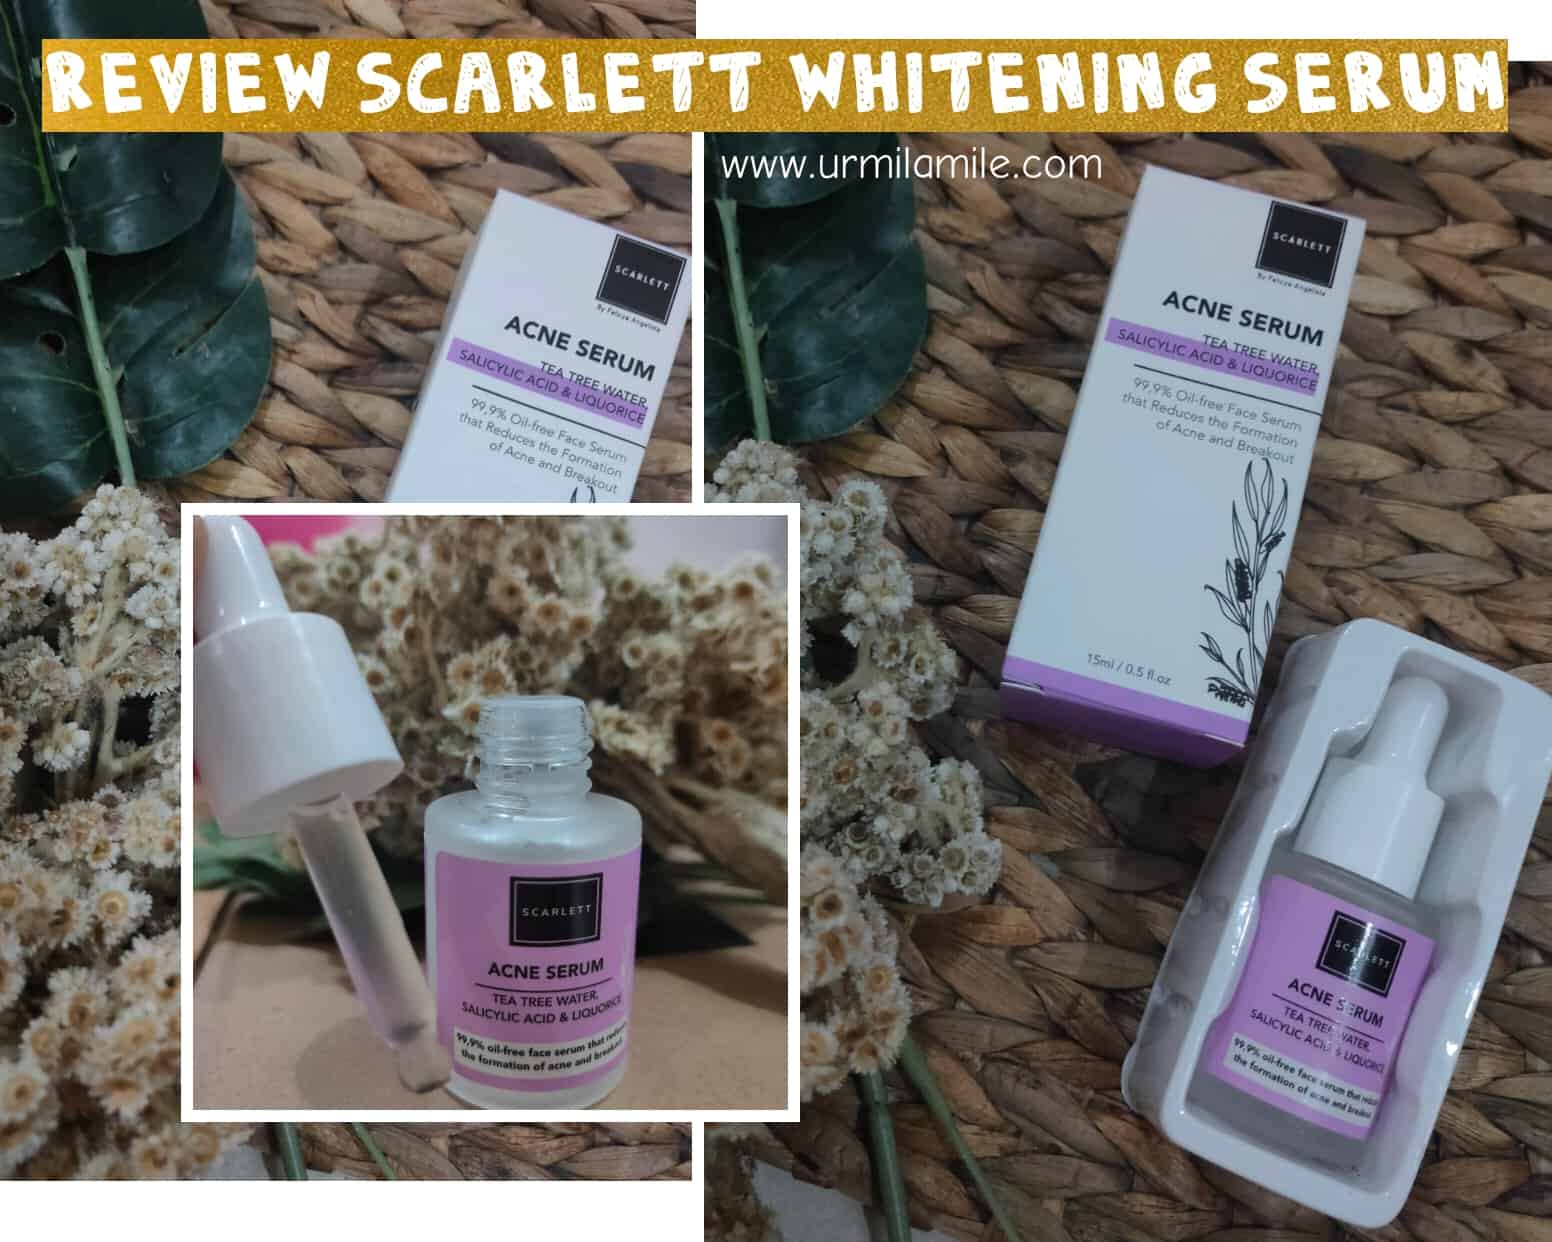 Urmilamile - Review Scarlett Whitening Serum